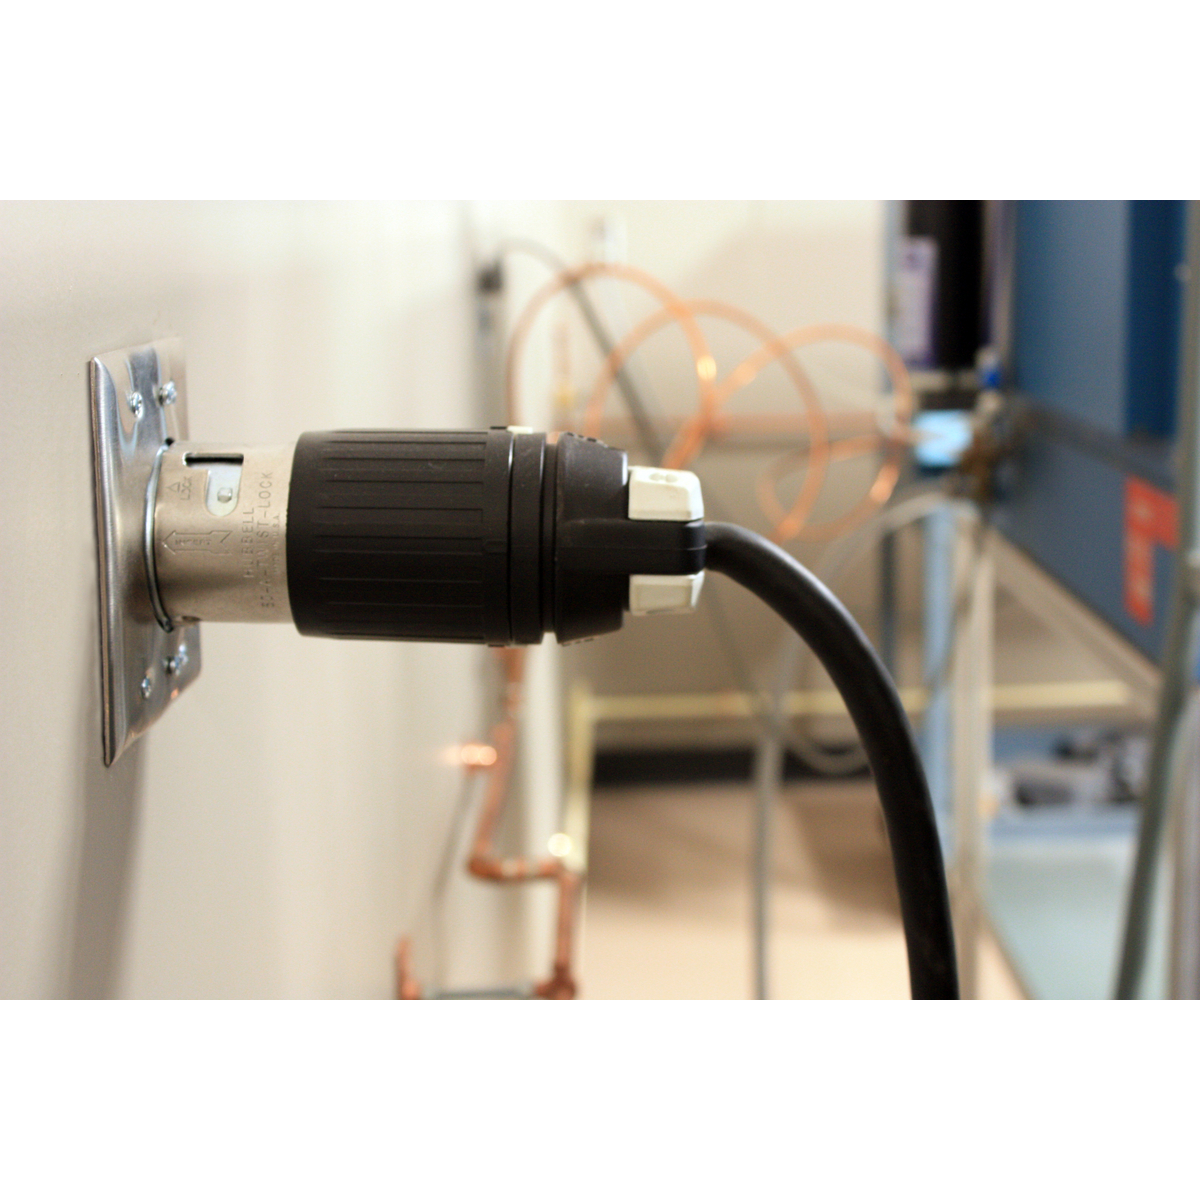 Hubbell CS8365C Twist-lock Locking Electrical Plug for sale online 